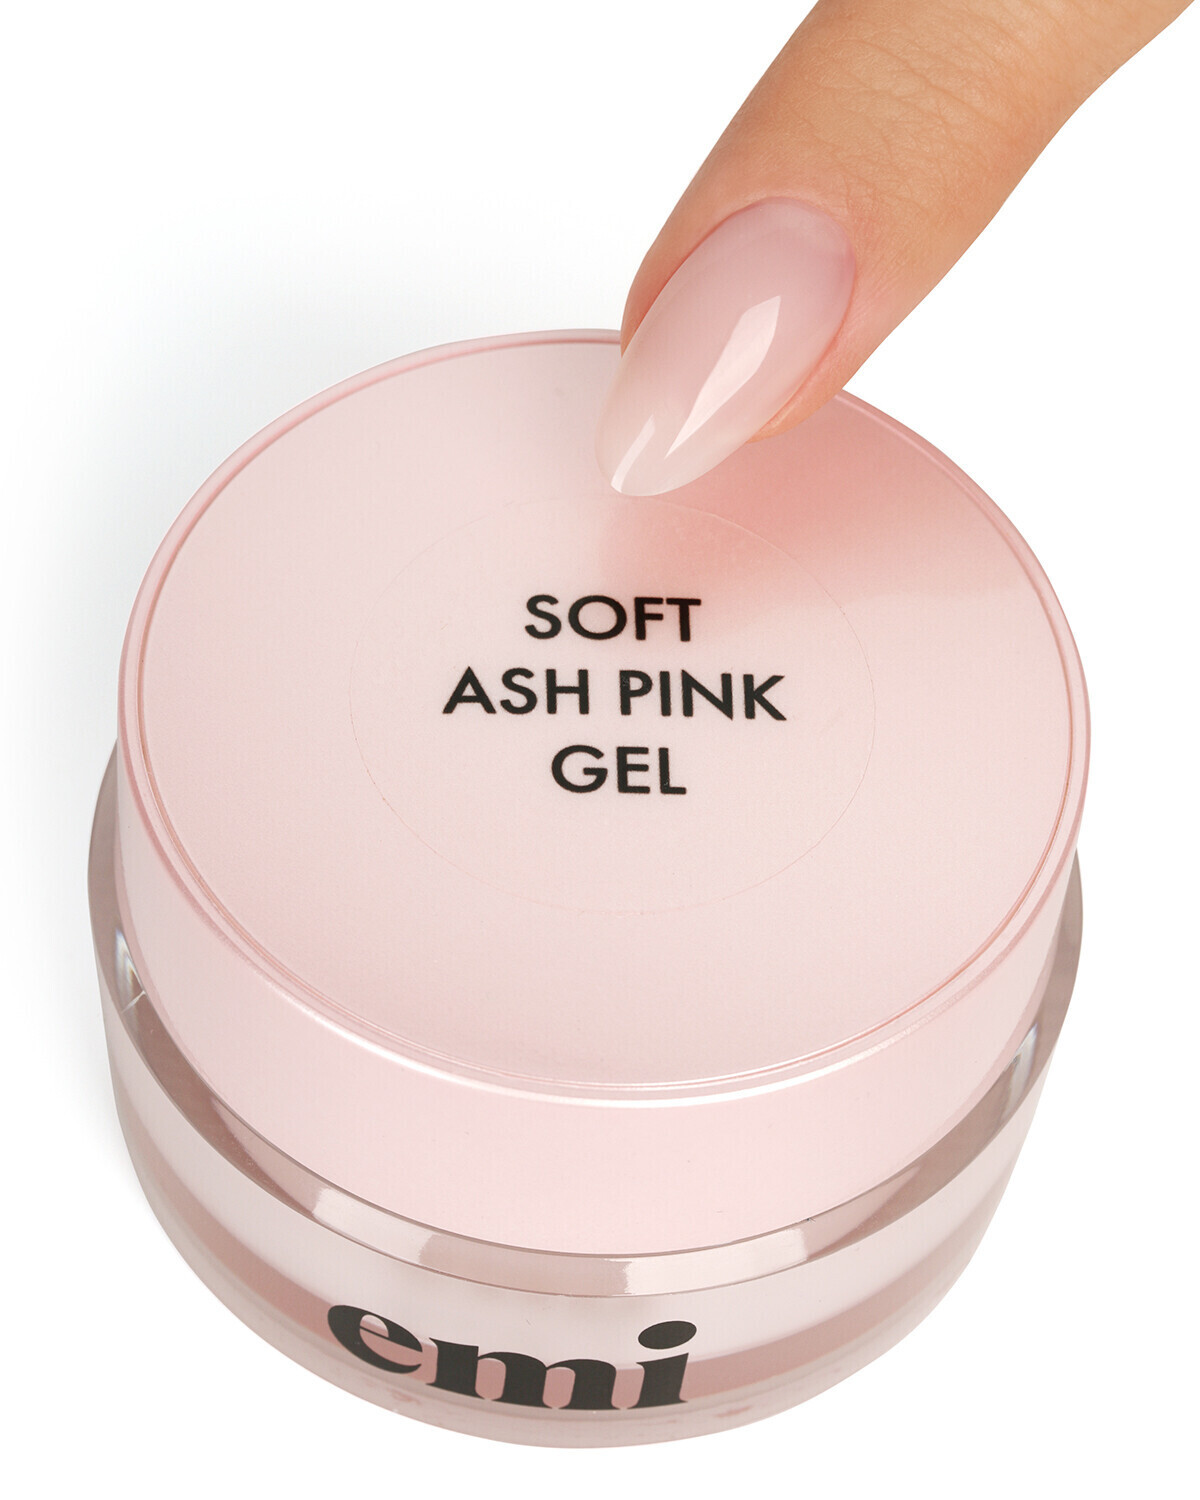 Soft Ash Pink Gel, 15g.